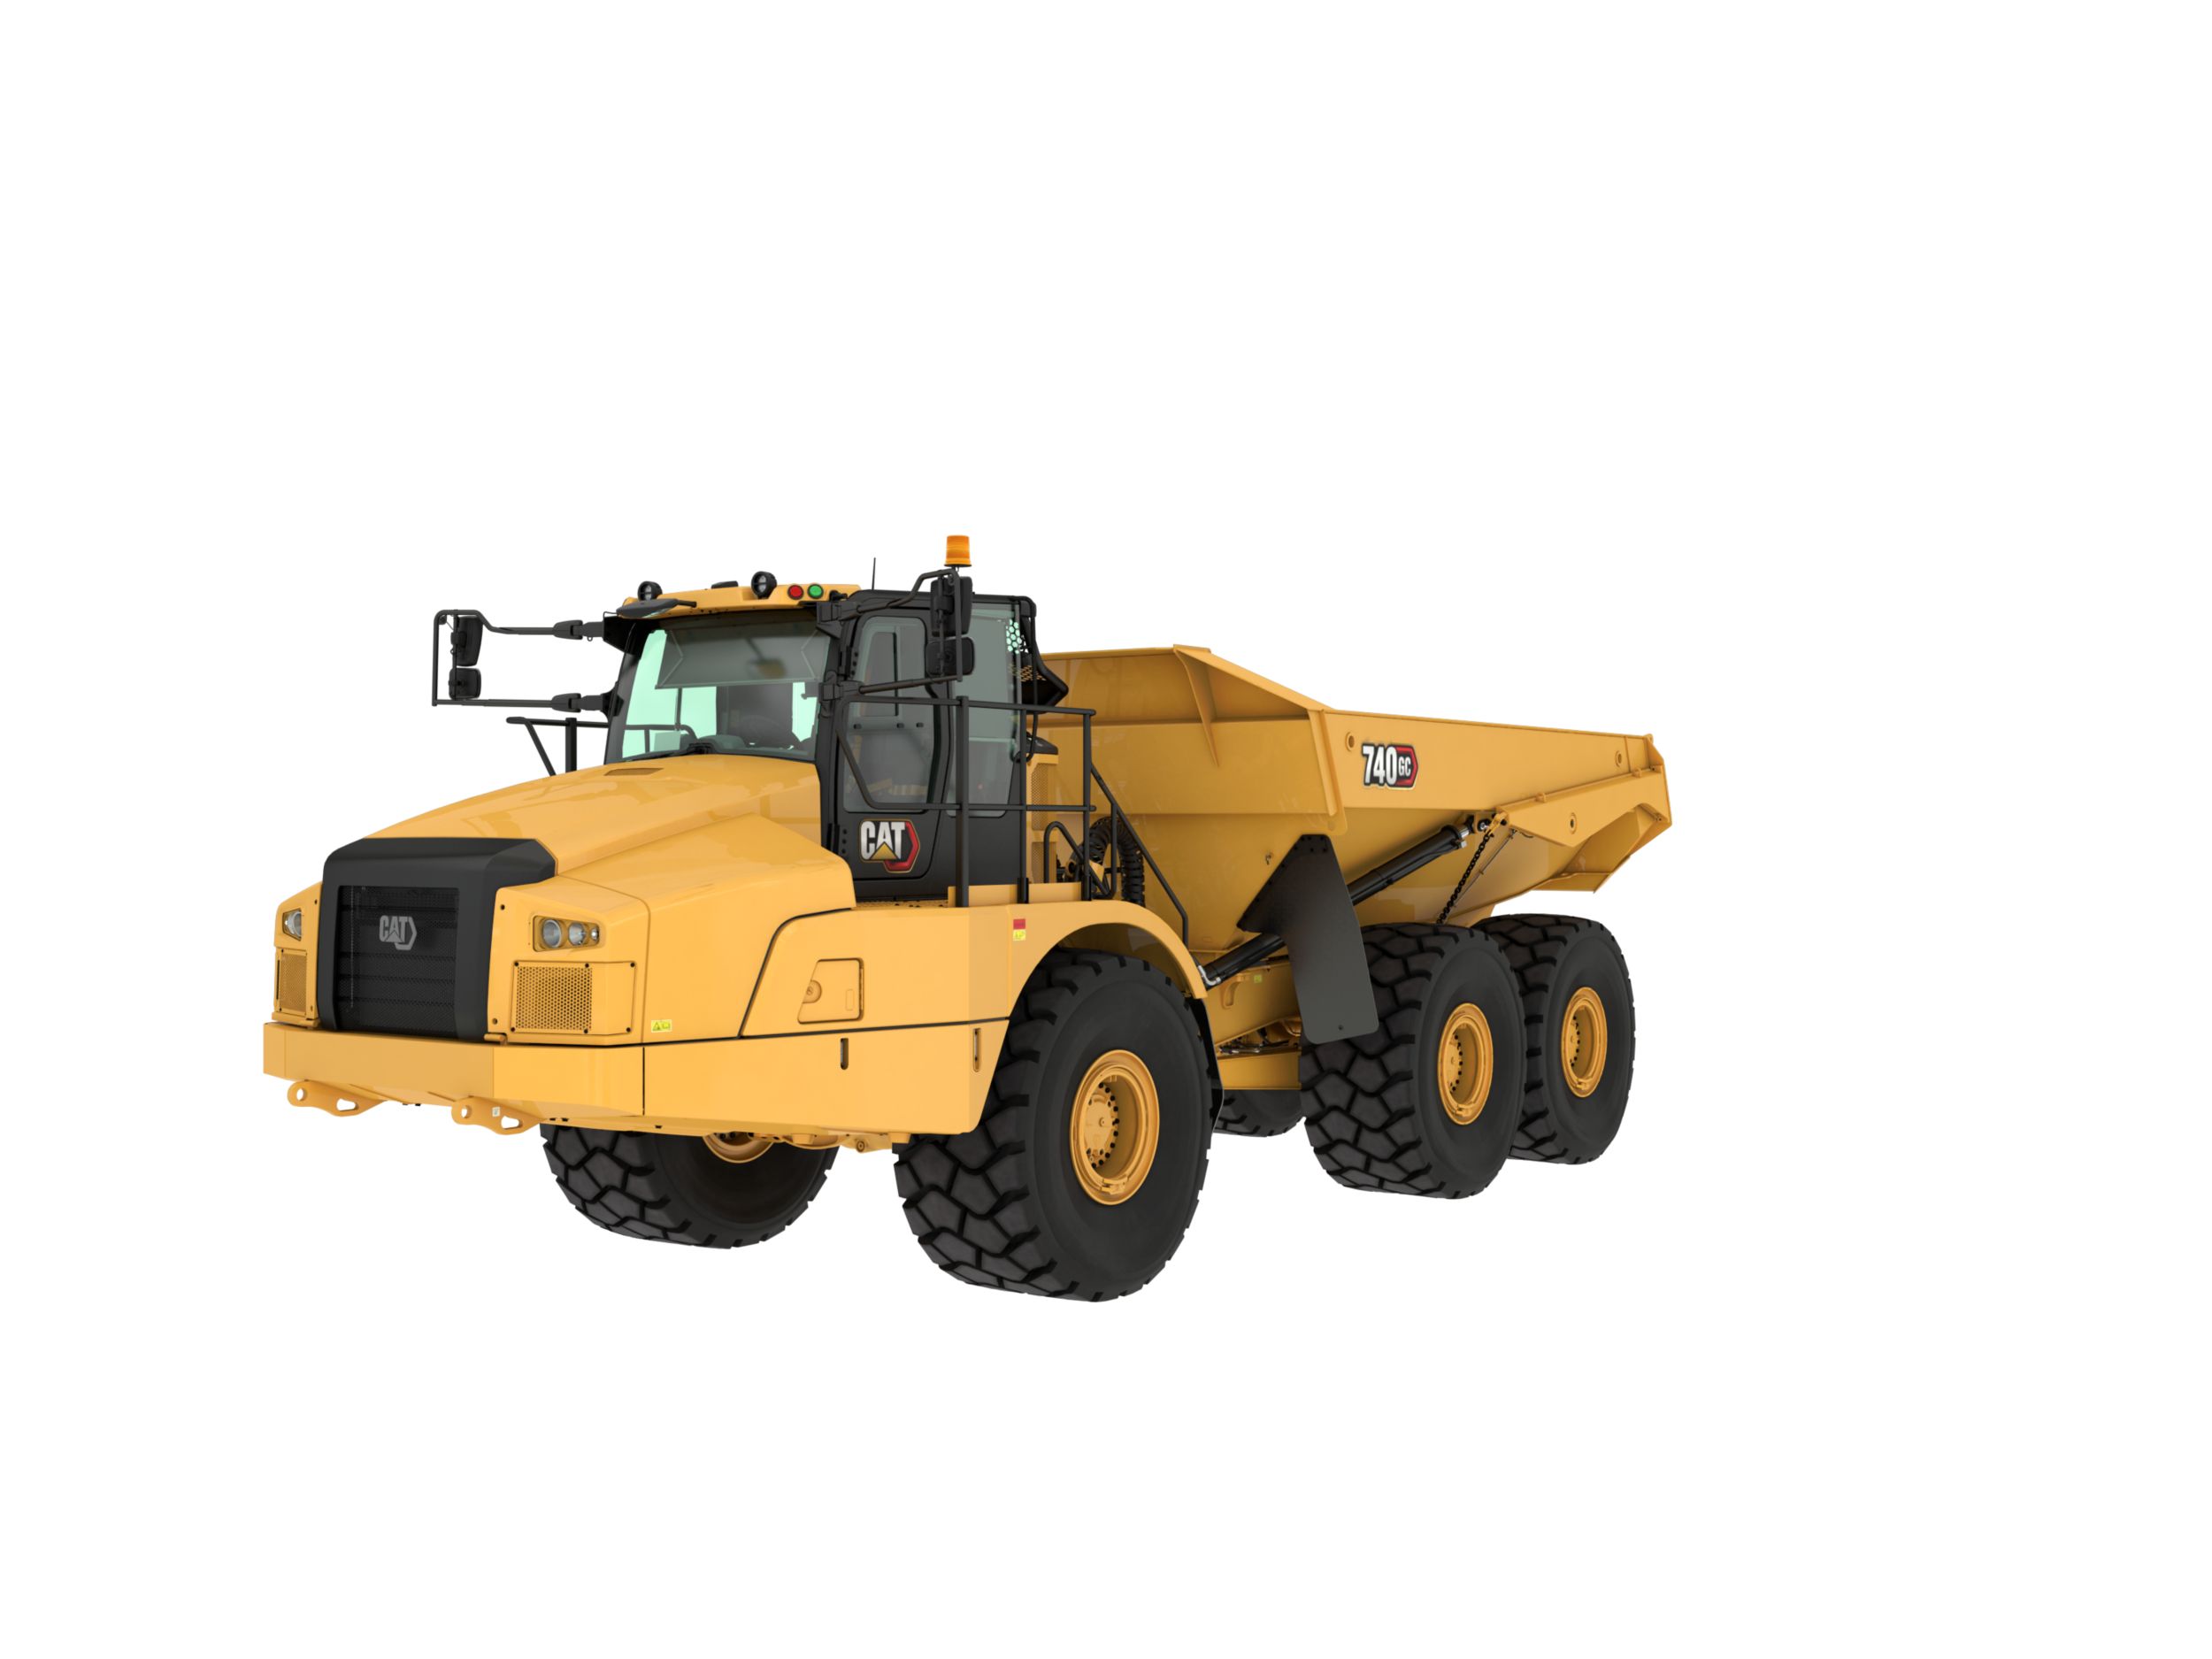 740 Gc Articulated Haul Truck Cat Caterpillar